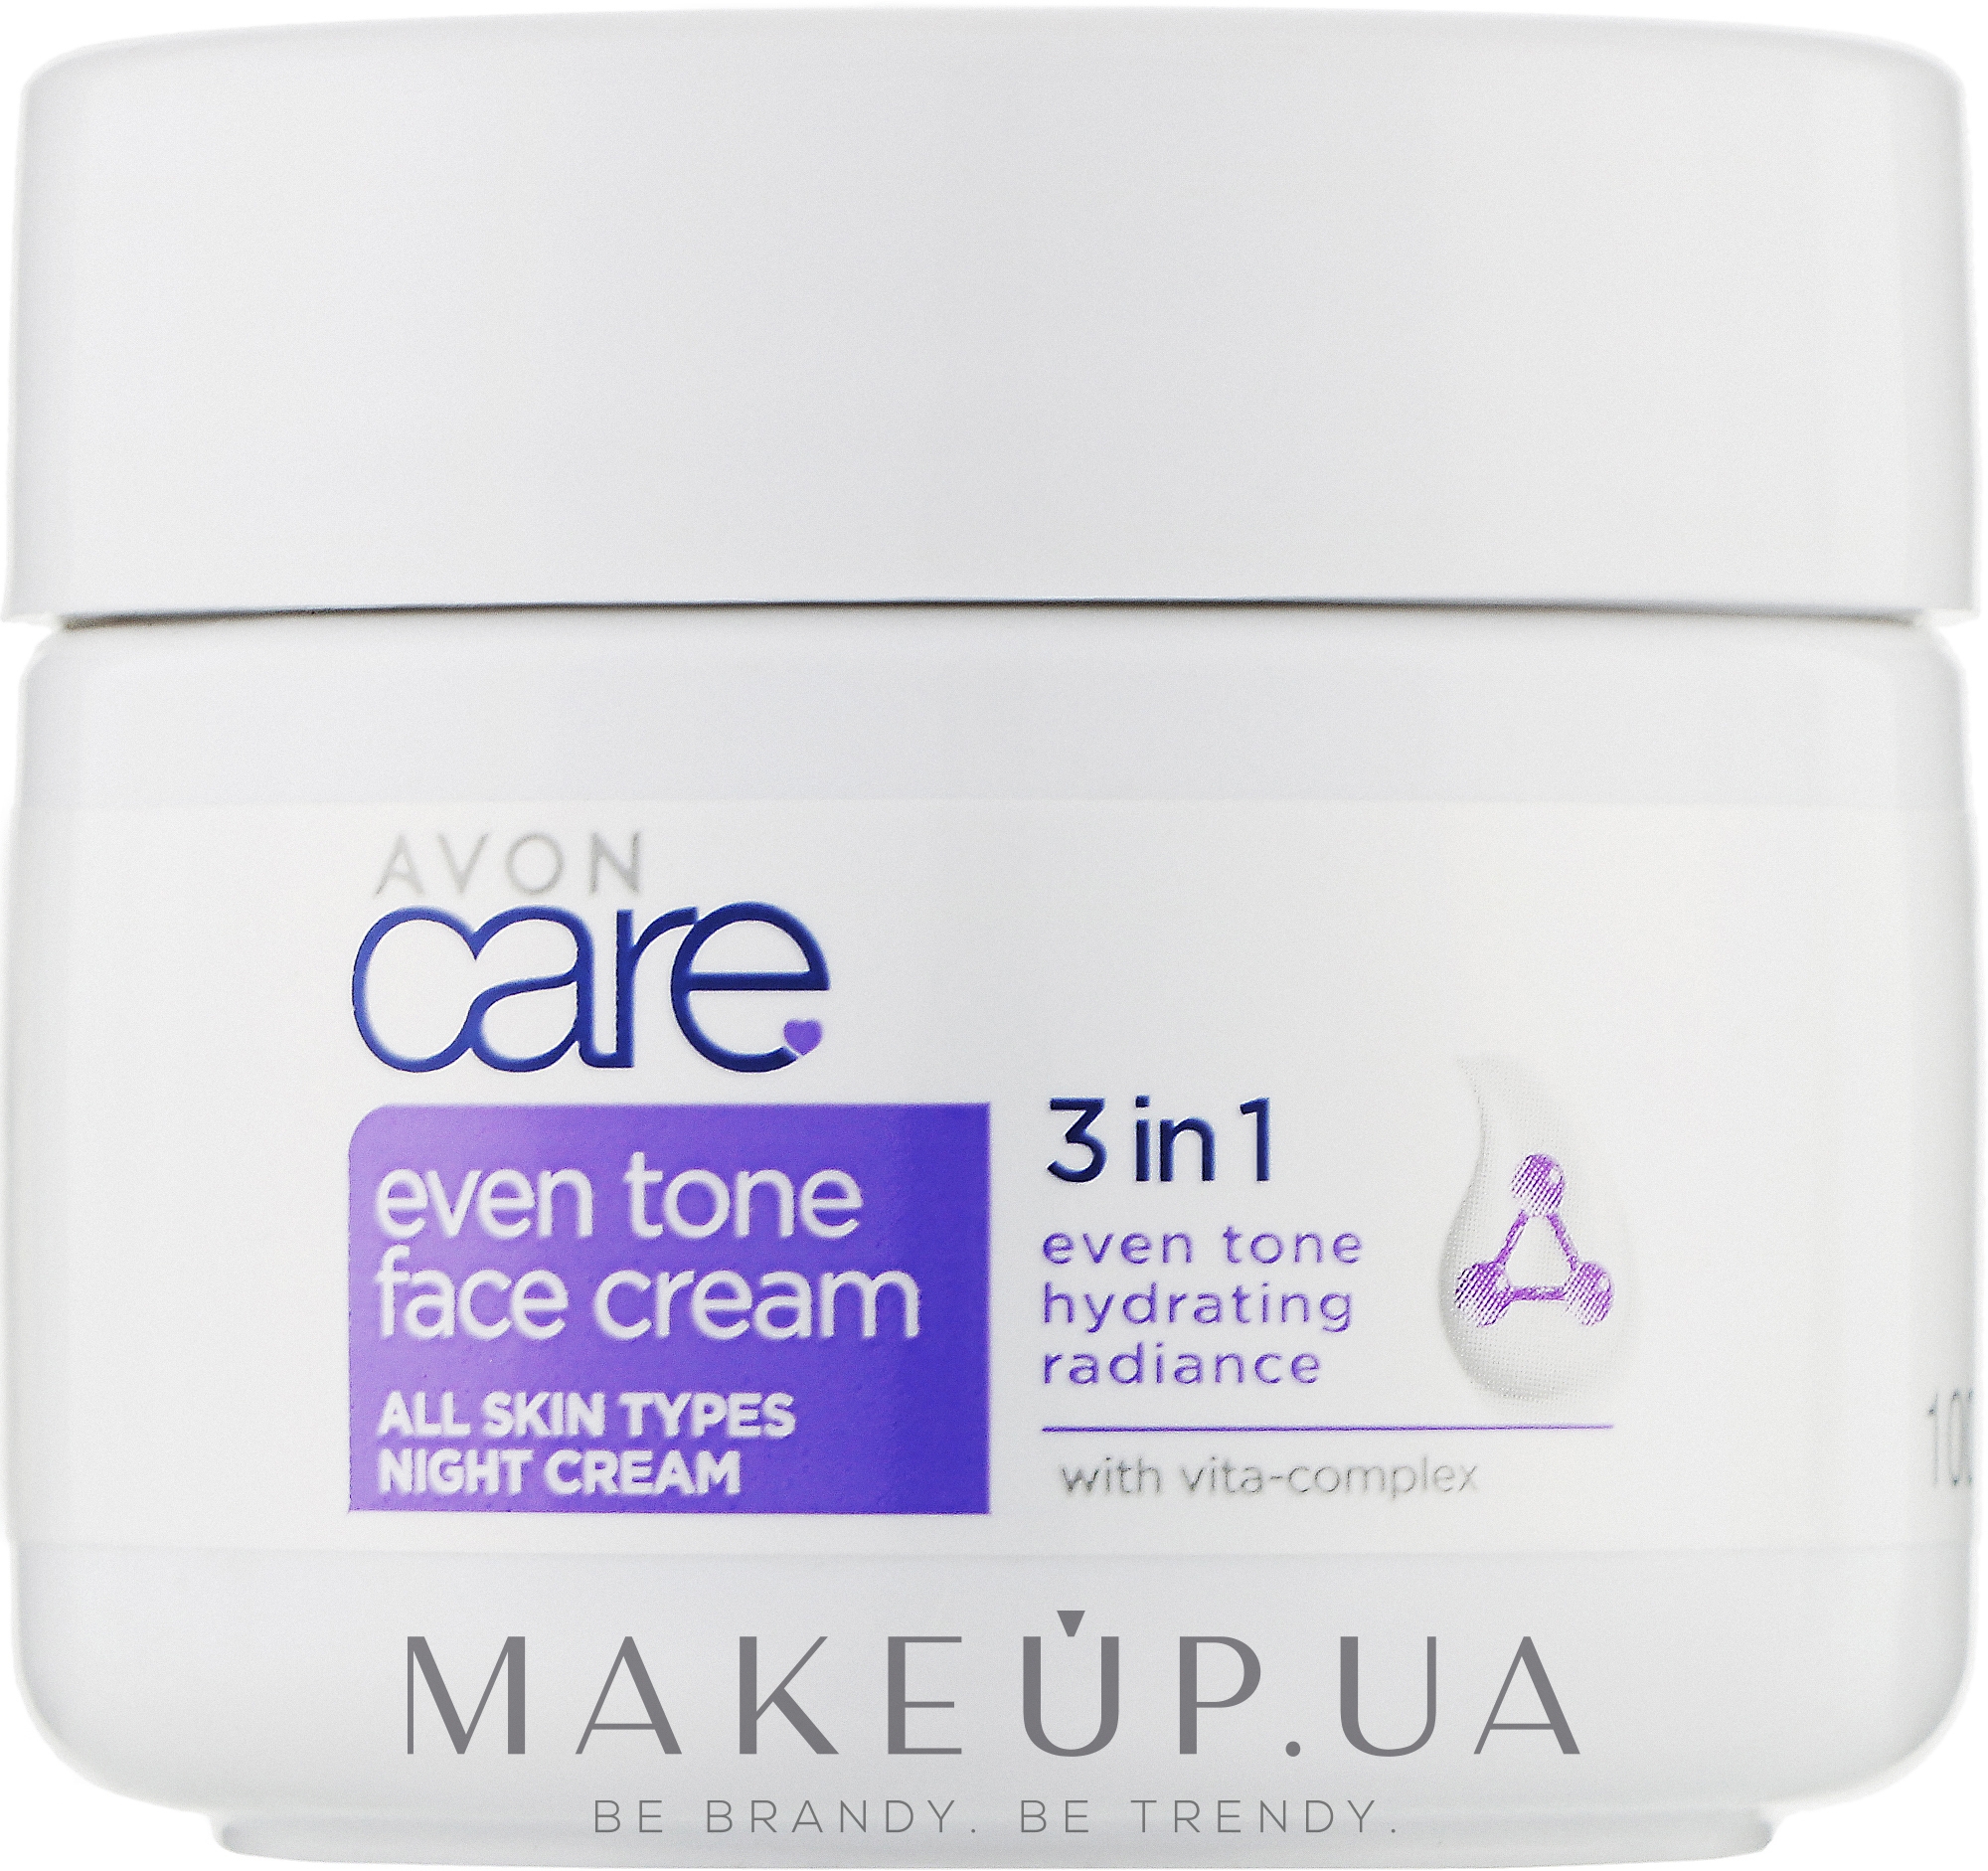 Дневной крем выравнивающий тон кожи 3 в 1 - Avon Care Even Tone Day Face Cream 3 in 1 — фото 100ml